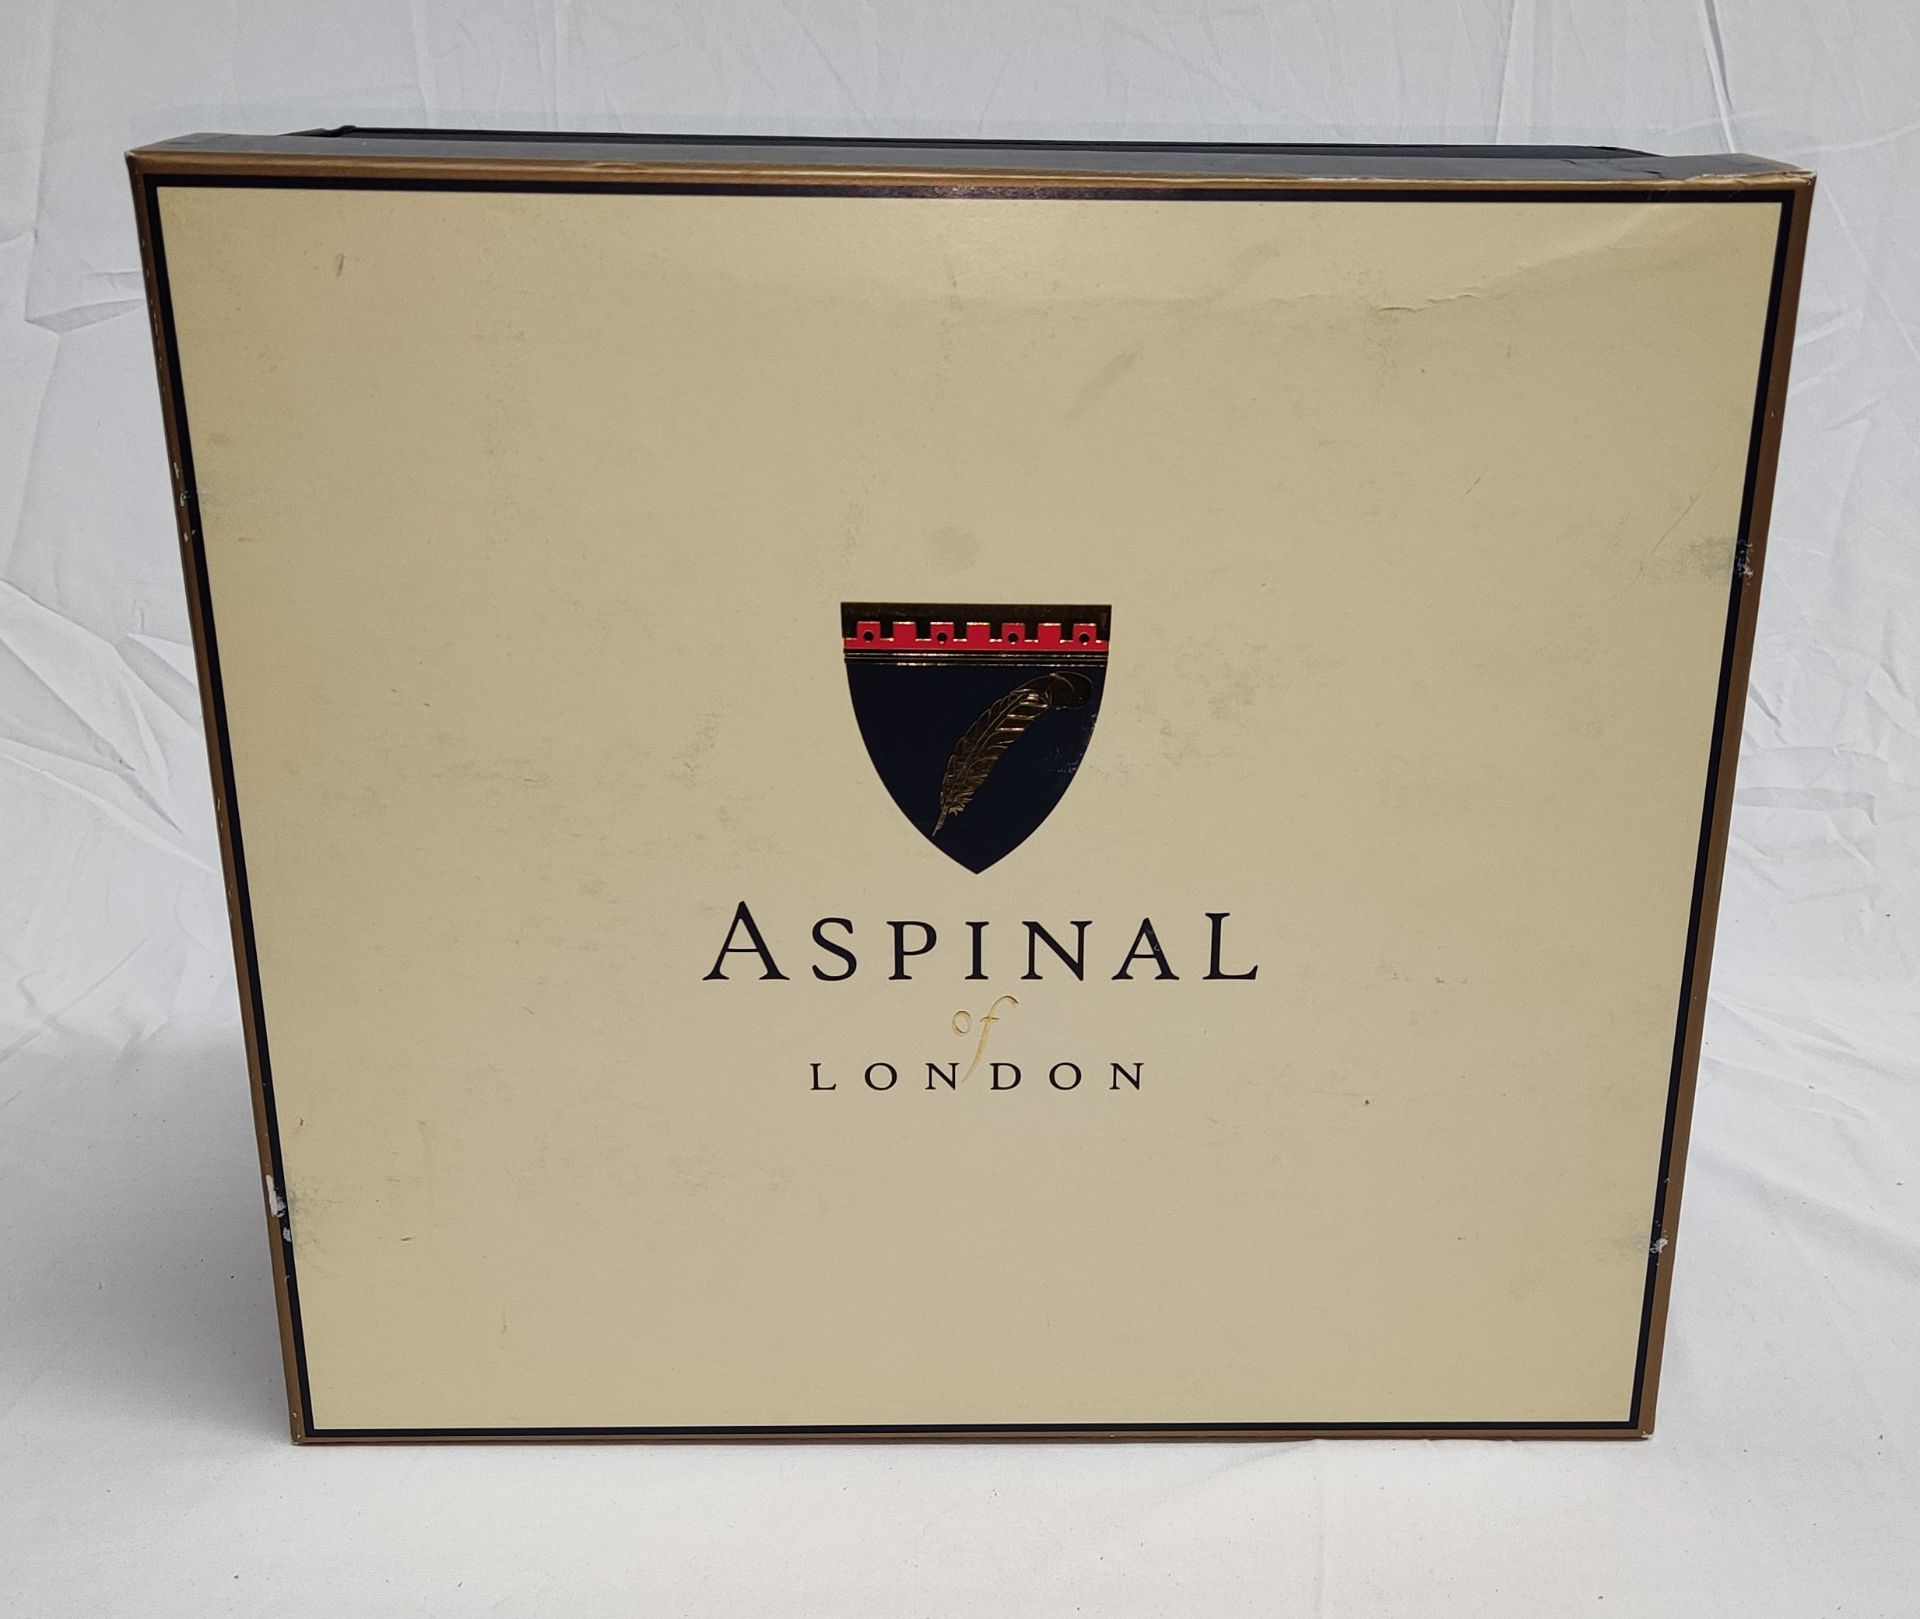 1 x ASPINAL OF LONDON Mayfair Bag - Evergreen Patent Croc - Original RRP £695.00 - Image 18 of 23